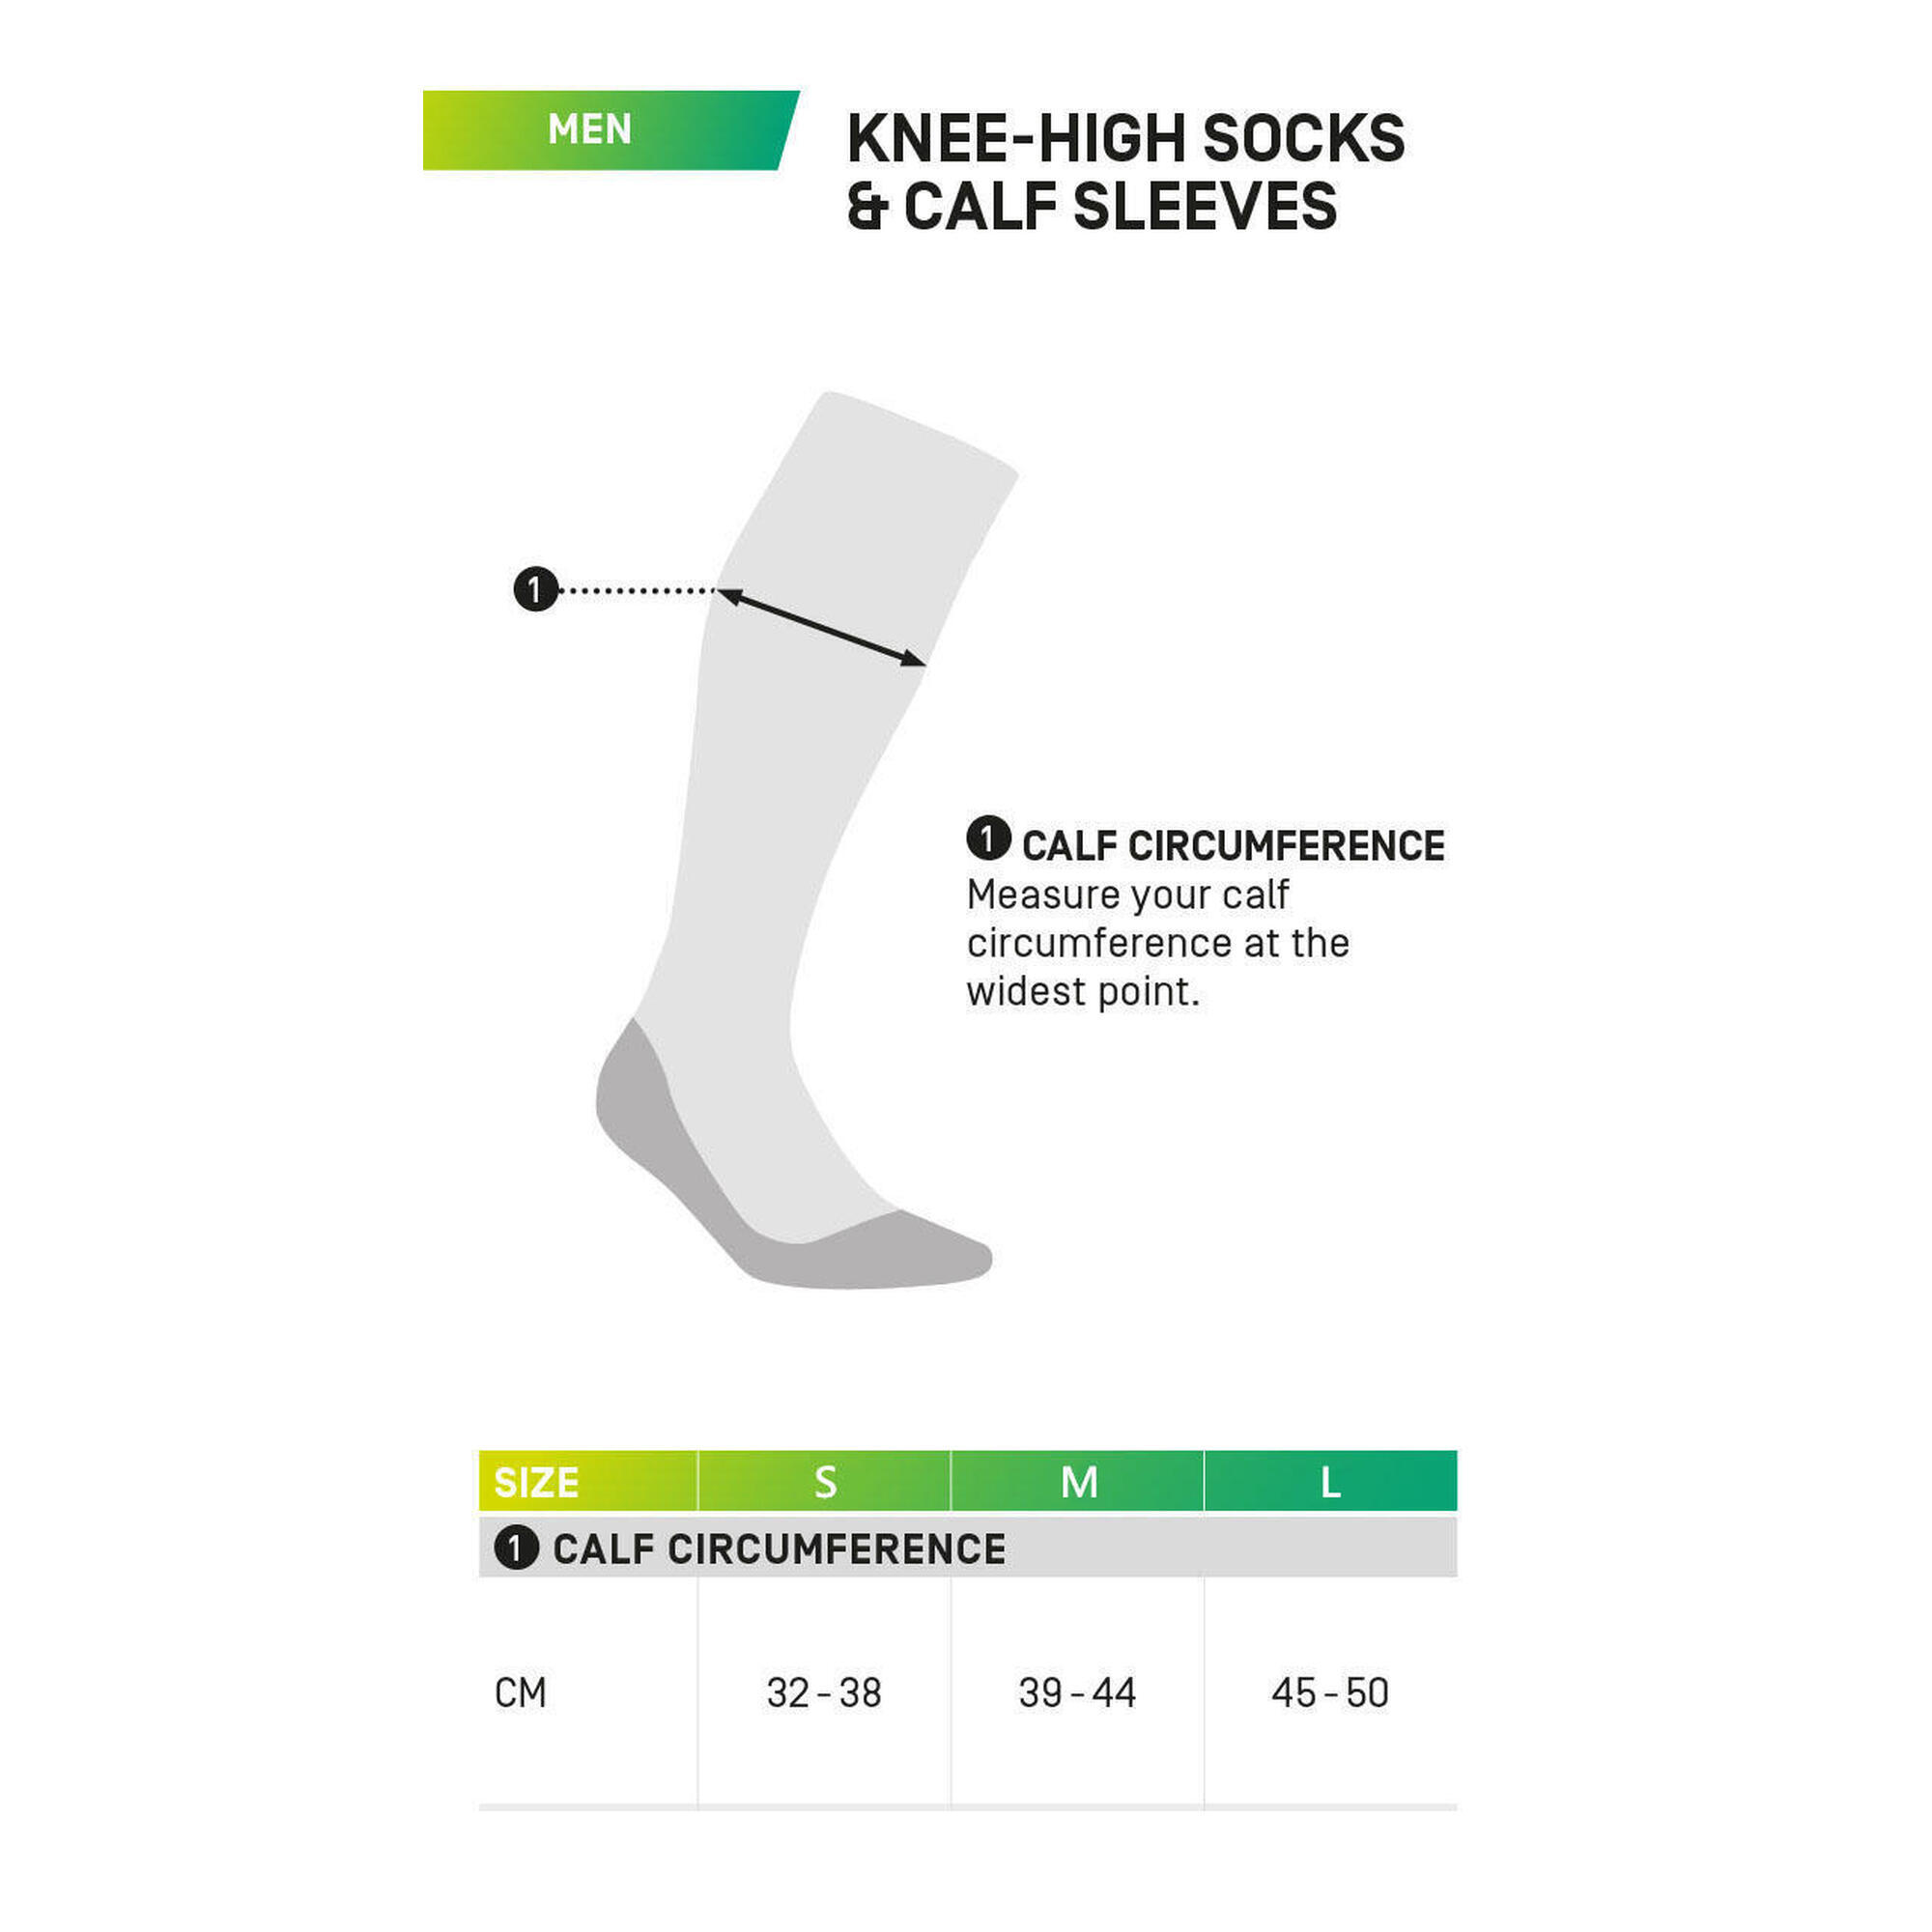 The Run Socks V4 Tall 男士跑步壓力襪 (一對) - 橄欖綠